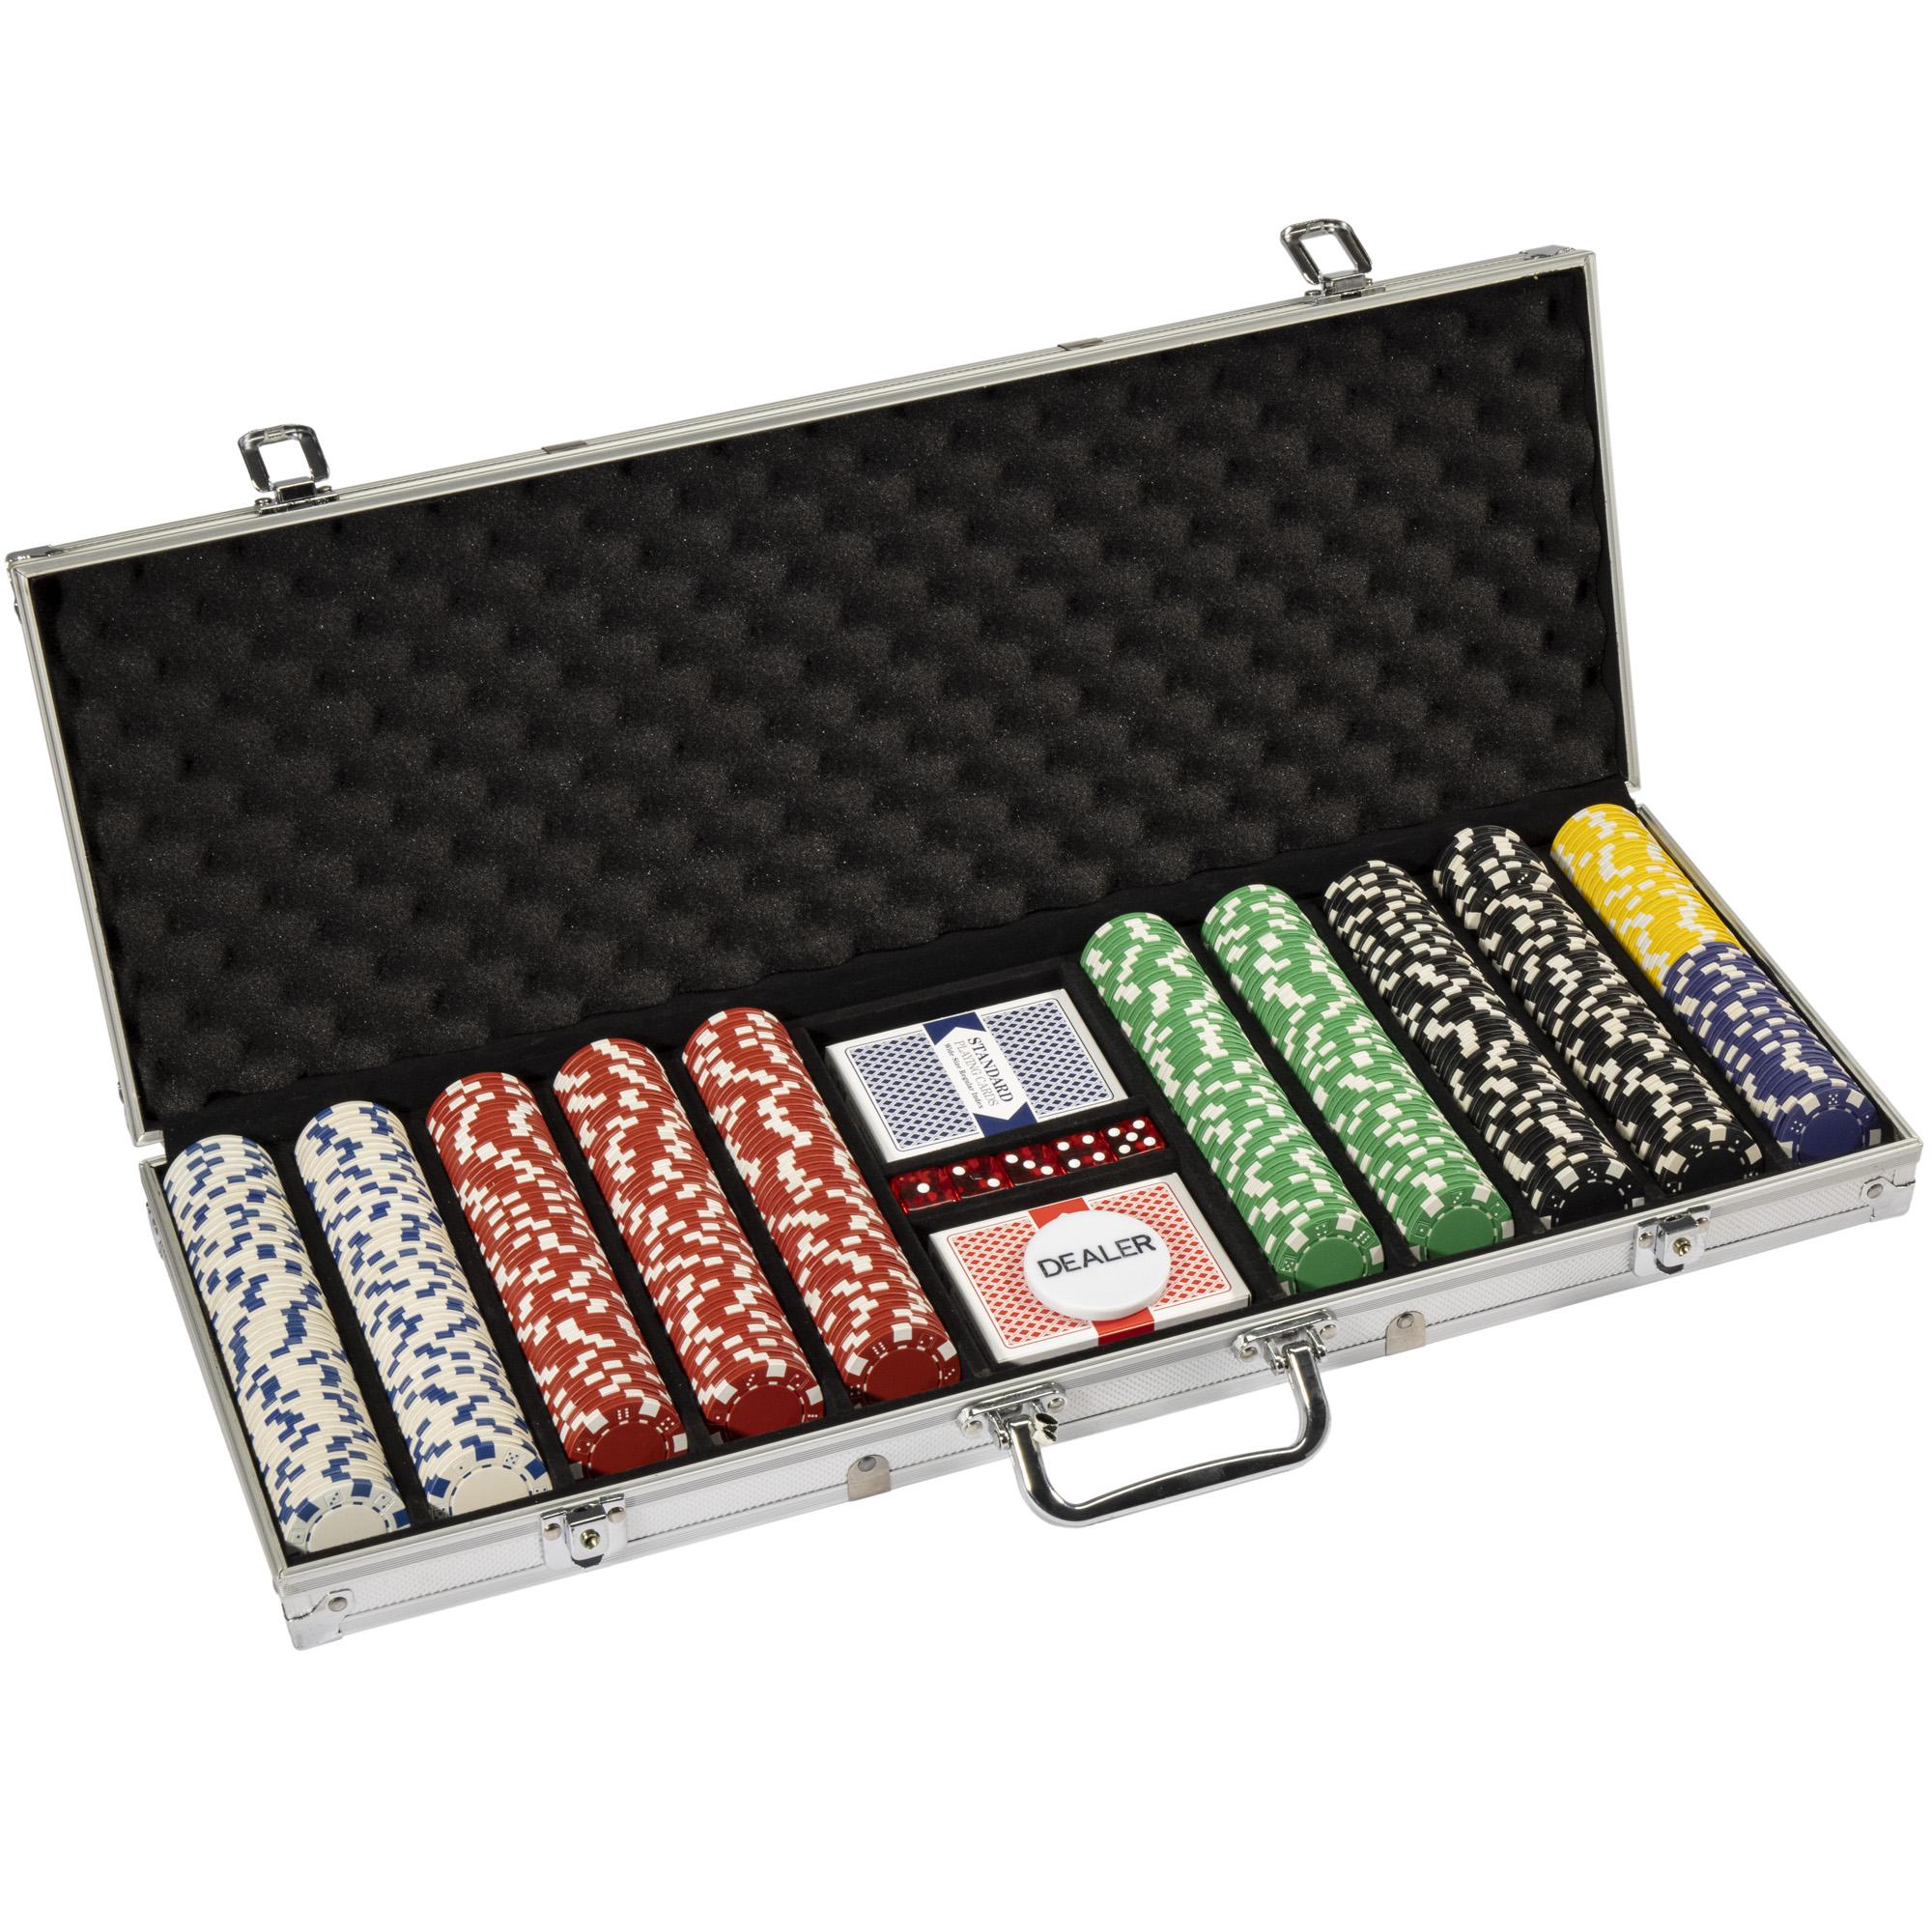 Striped Dice 11.5-gram Poker Chip Set in Aluminum Case (500 Count)